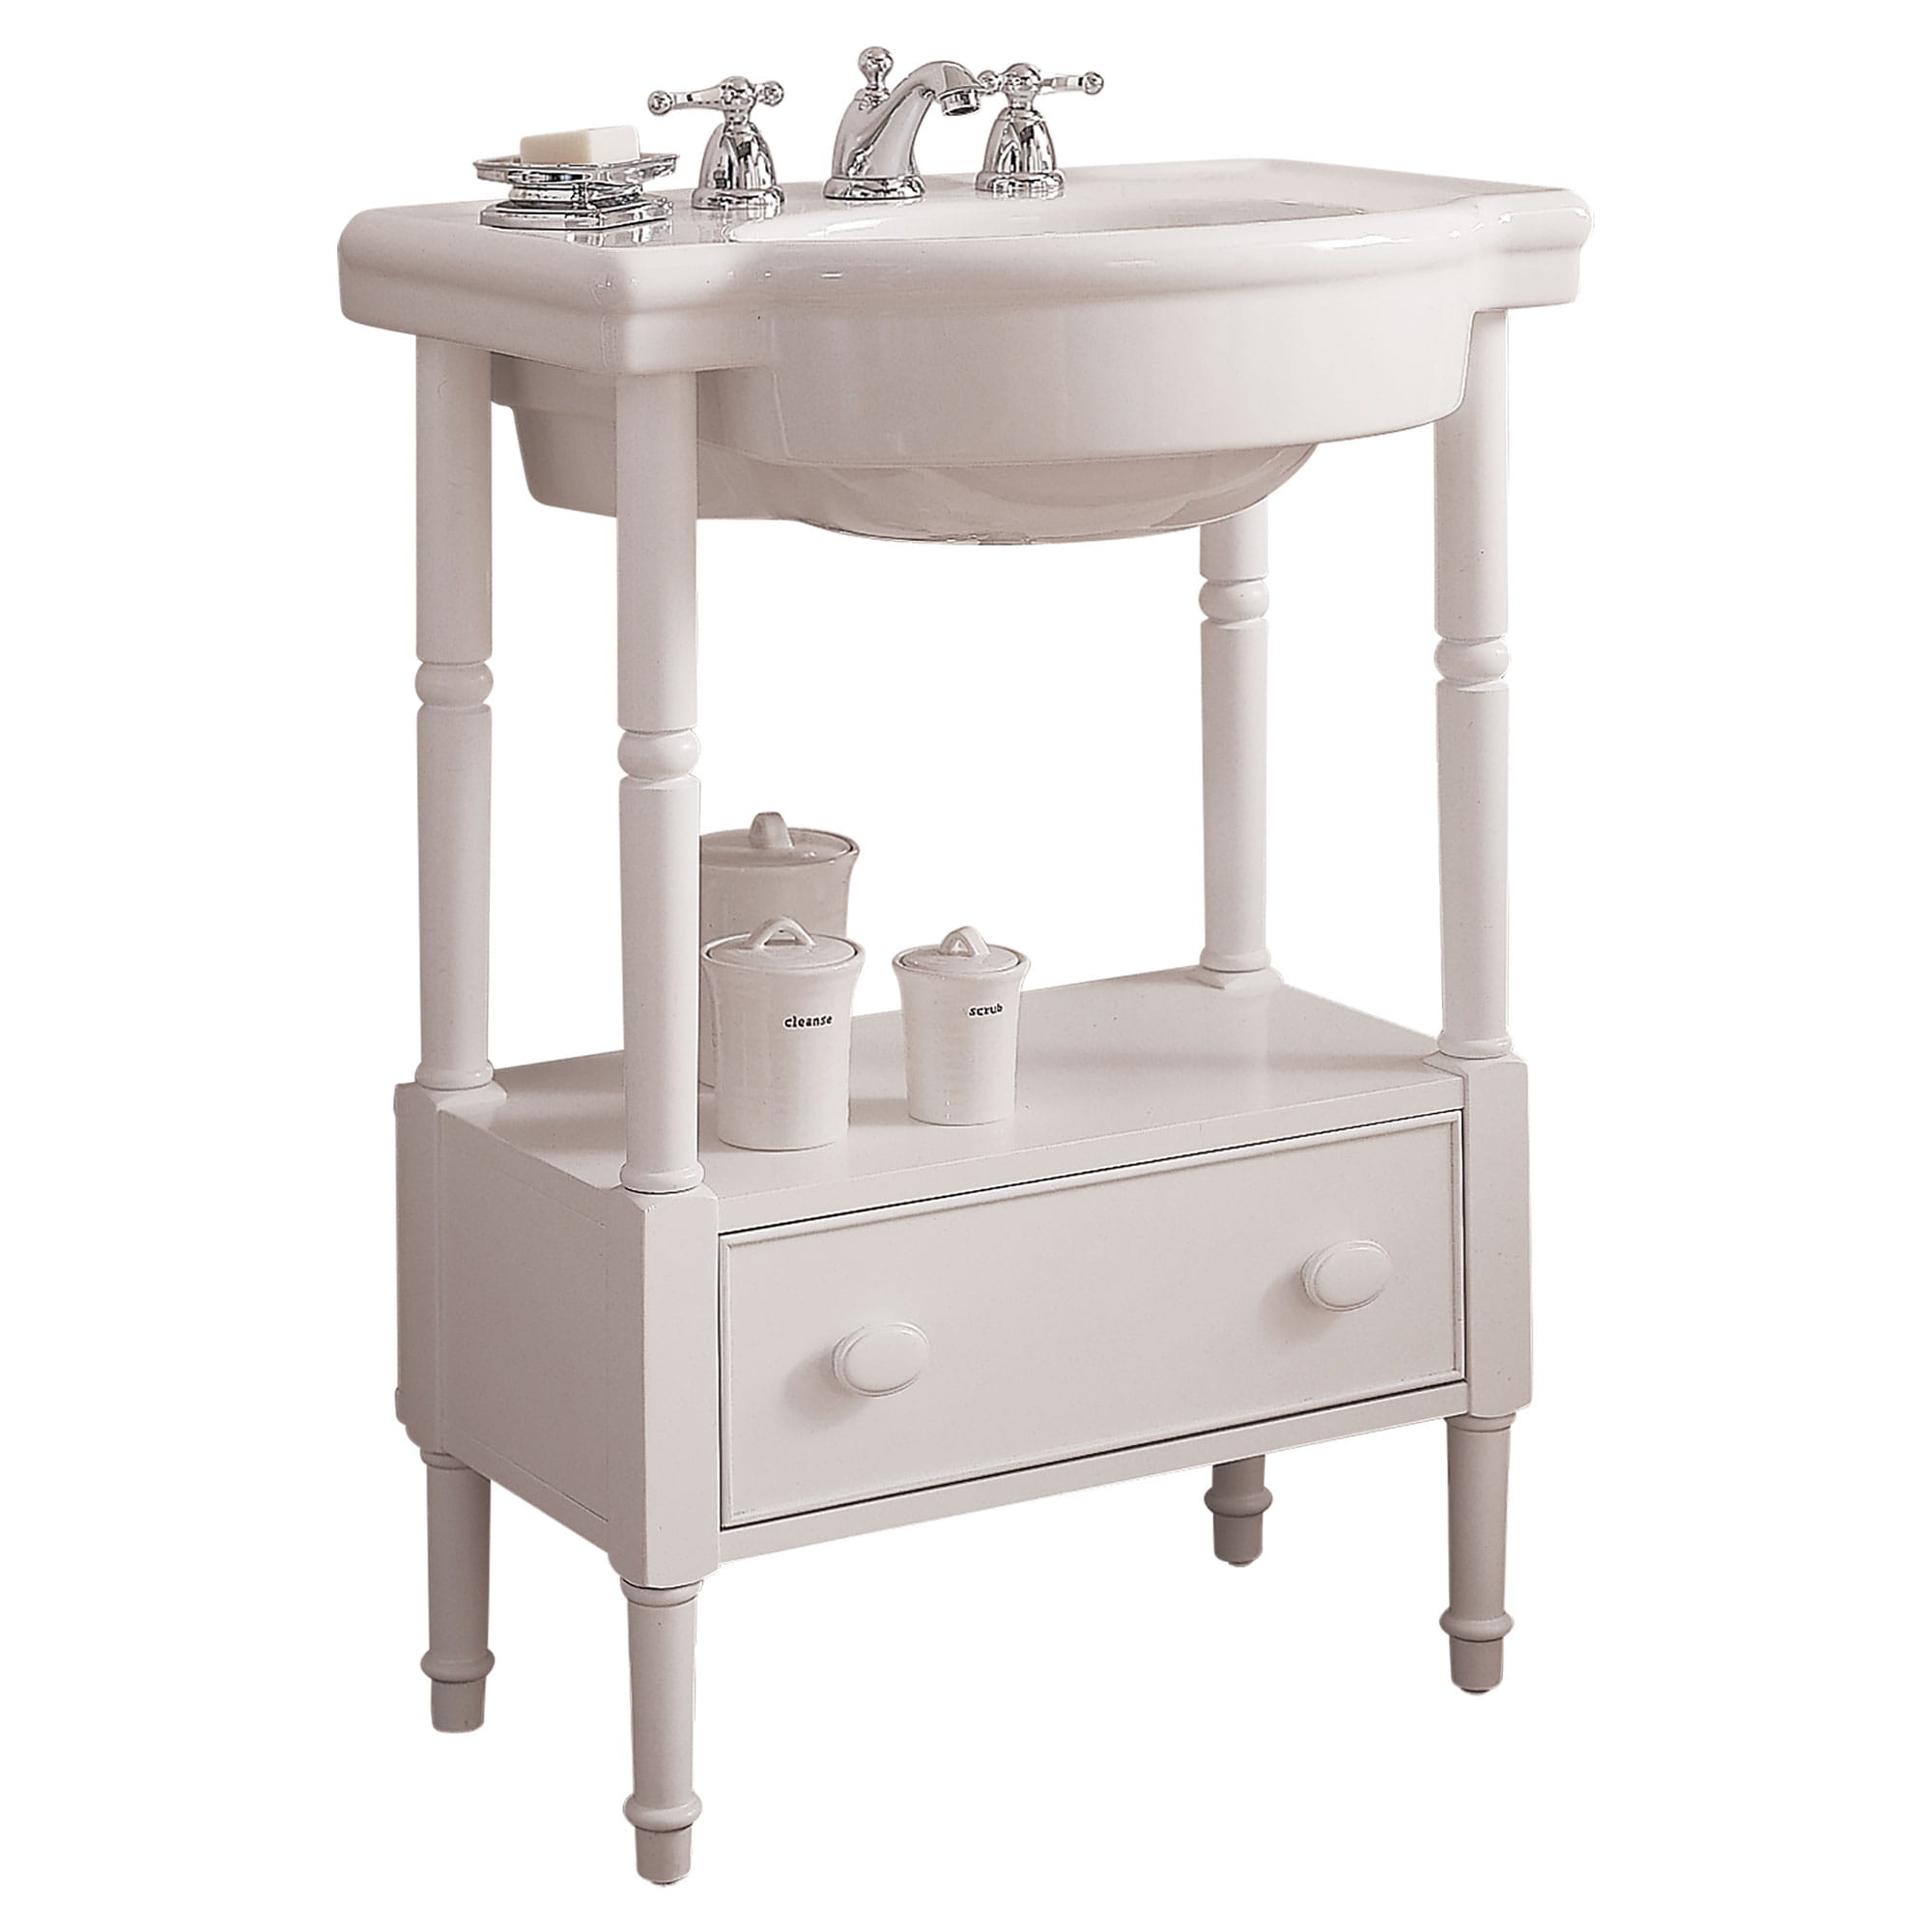 Retrospect® 8-Inch Widespread Pedestal Sink Top